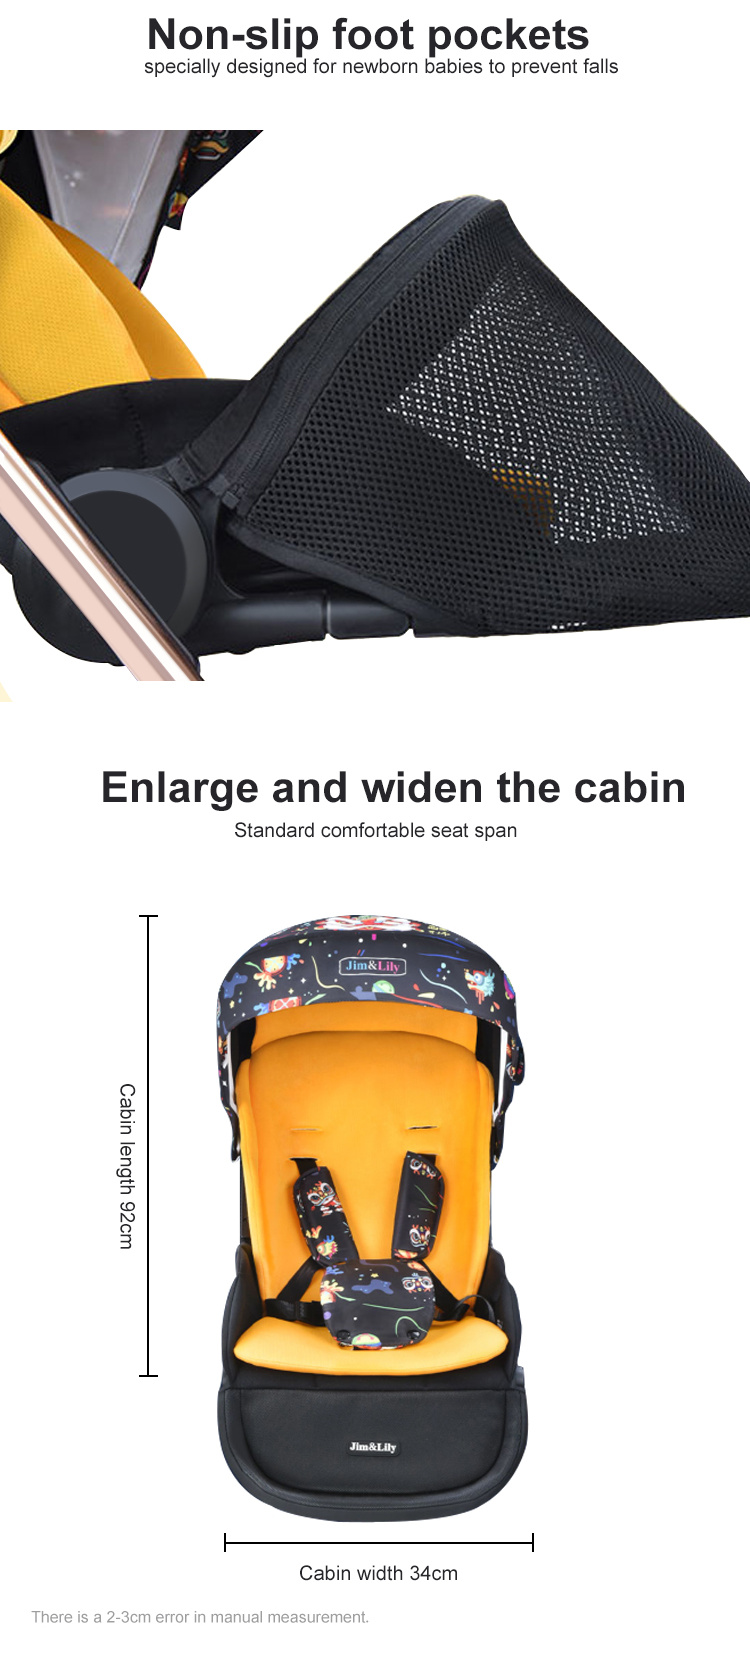 U'BEST High-view portable baby stroller walking artifact